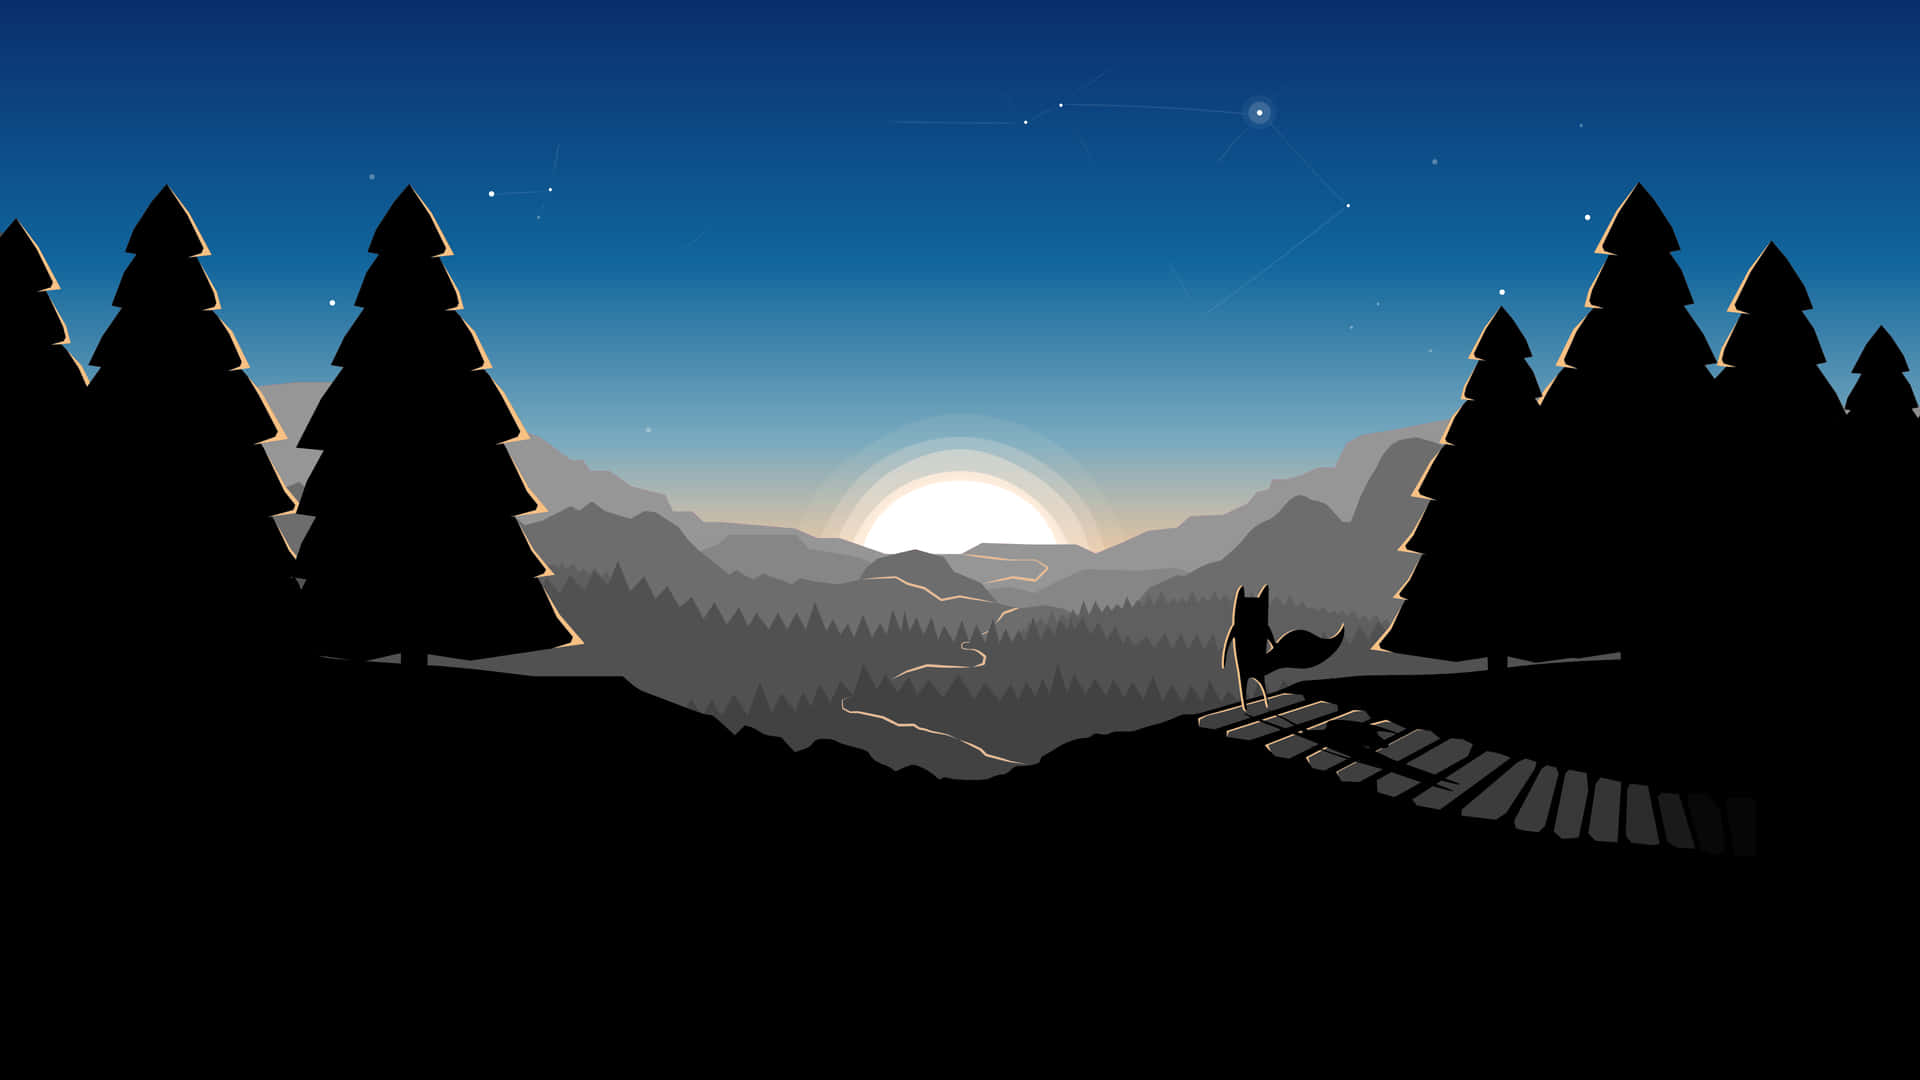 Free Adventure Time Landscape Wallpaper Downloads, [100+] Adventure Time Landscape  Wallpapers for FREE 